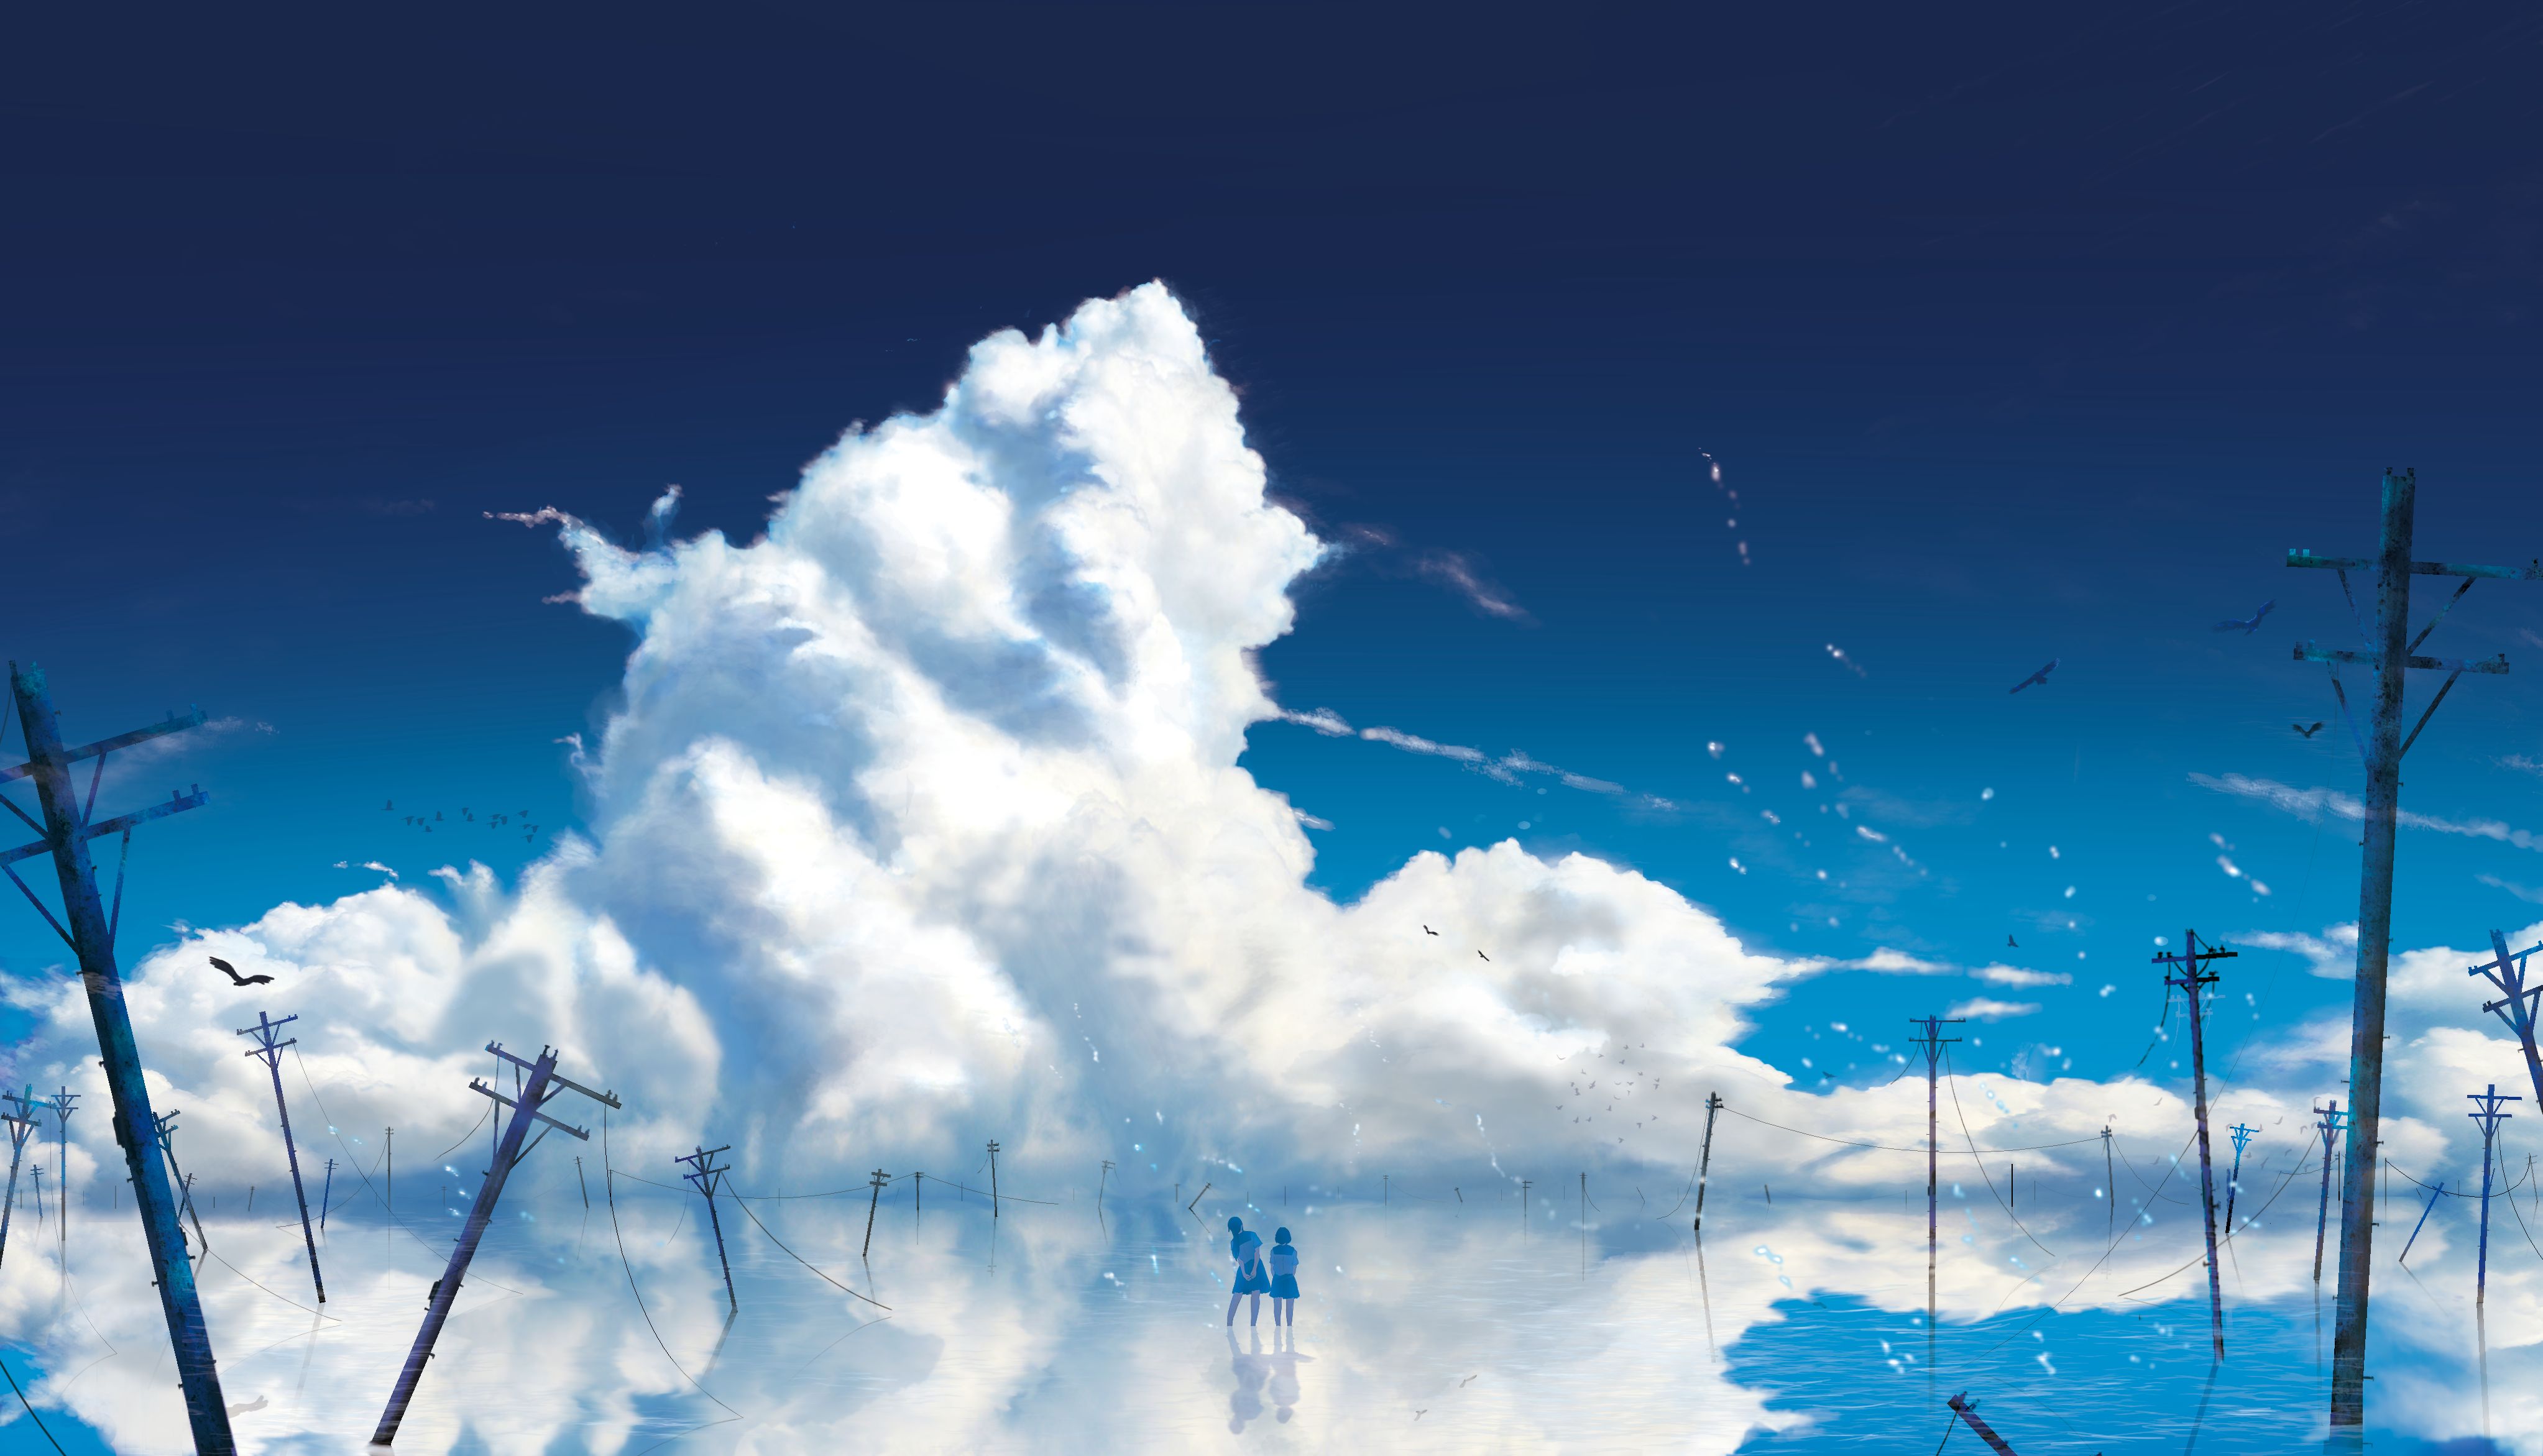 Anime Water Reflection Scenery 4K Wallpaper 6985